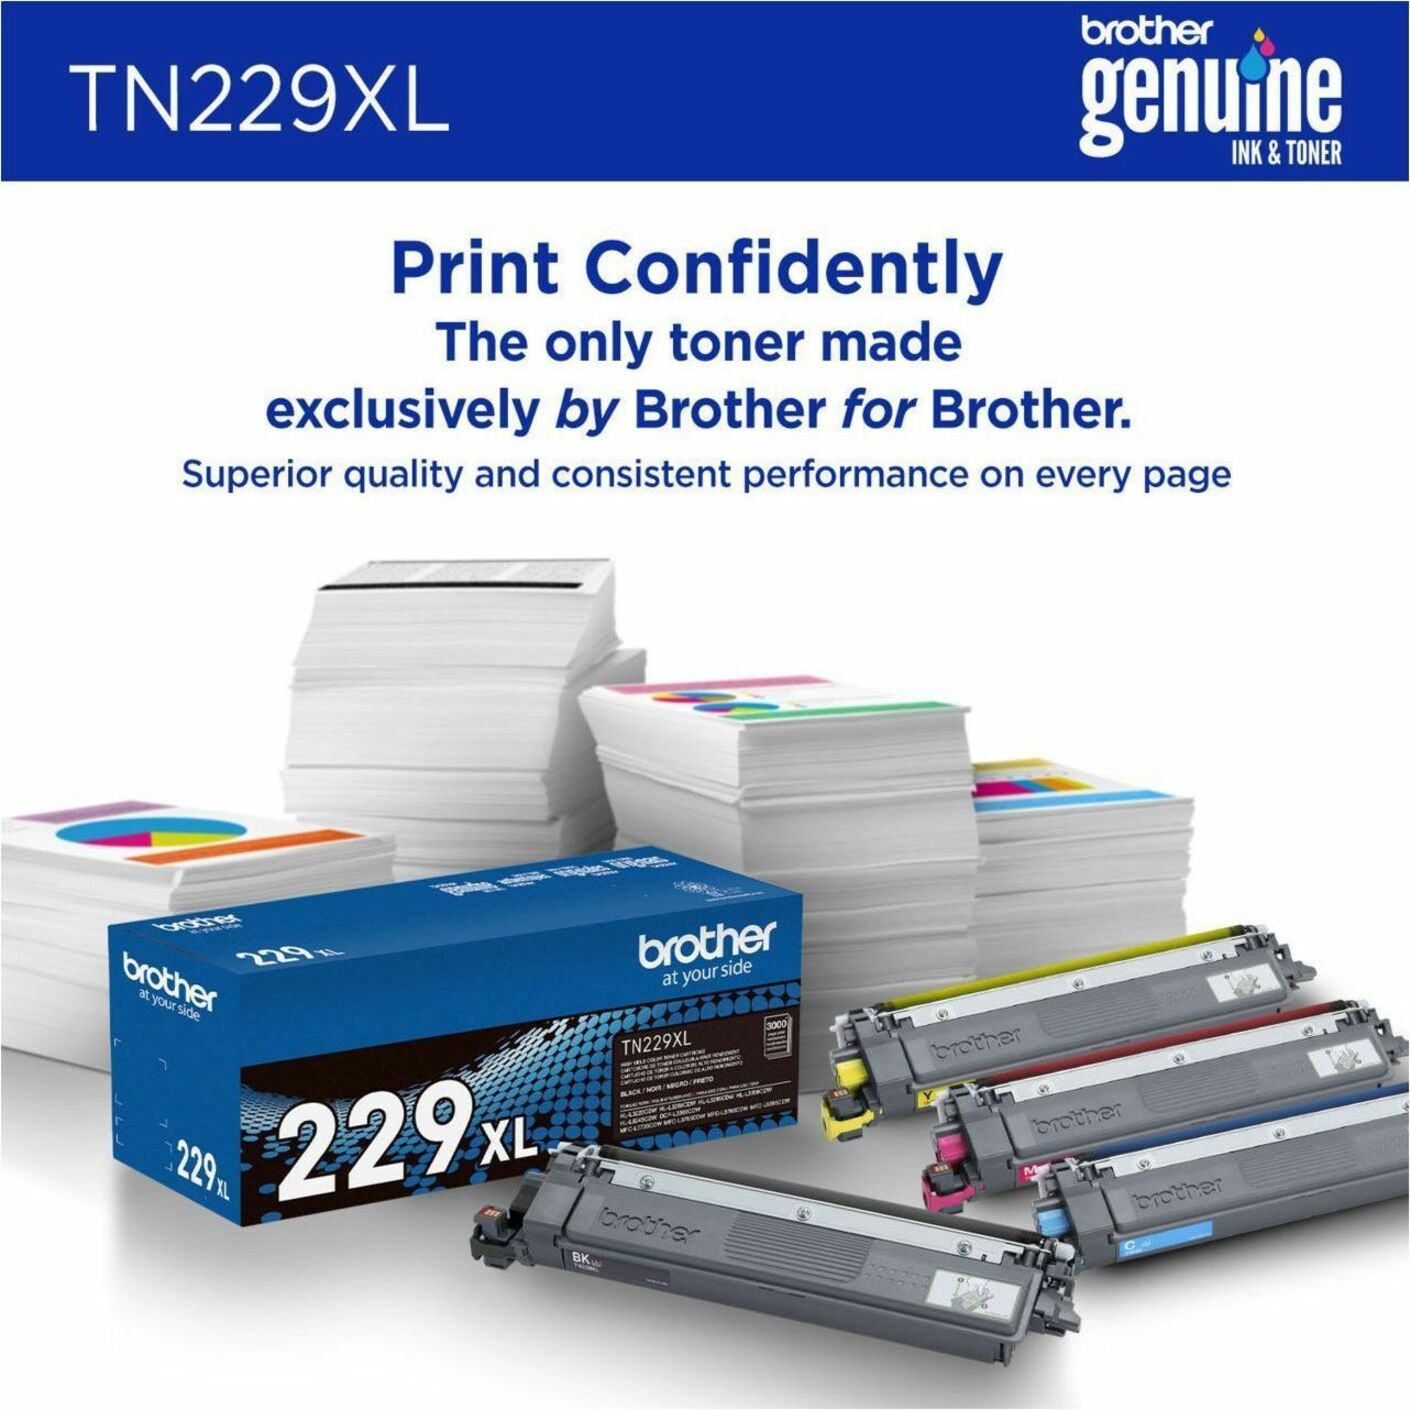 Brother TN229XLBK High-yield Black Toner Cartridge, for Brother Laser Printers